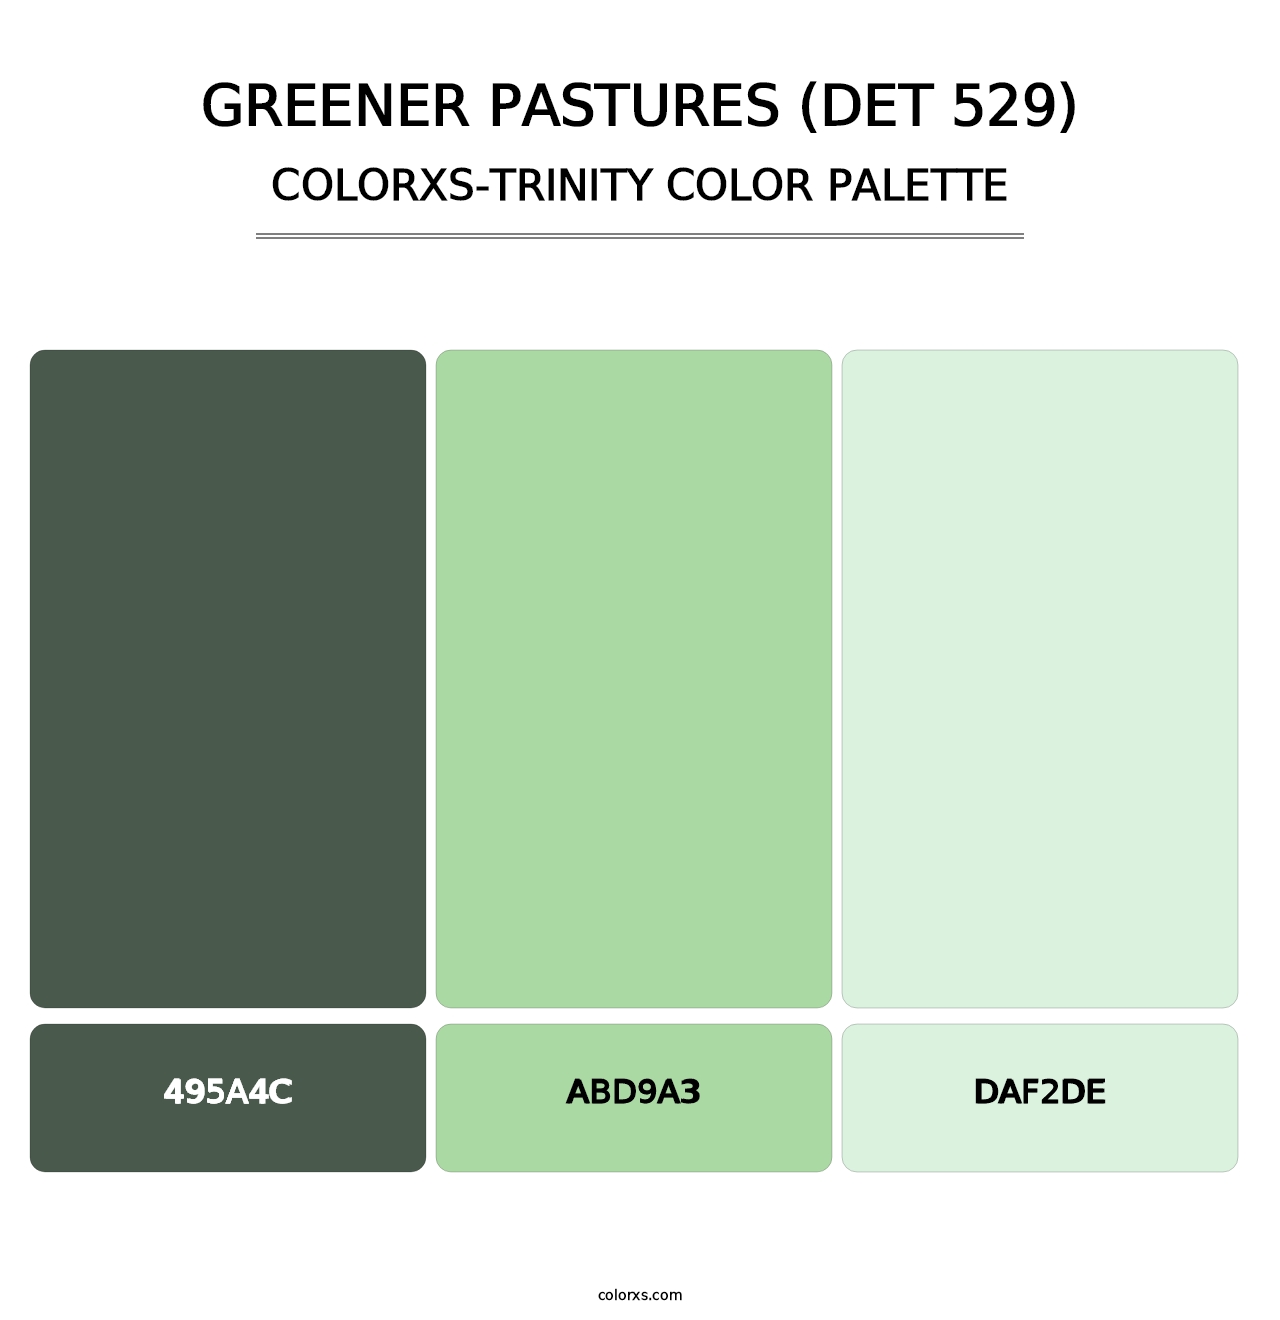 Greener Pastures (DET 529) - Colorxs Trinity Palette